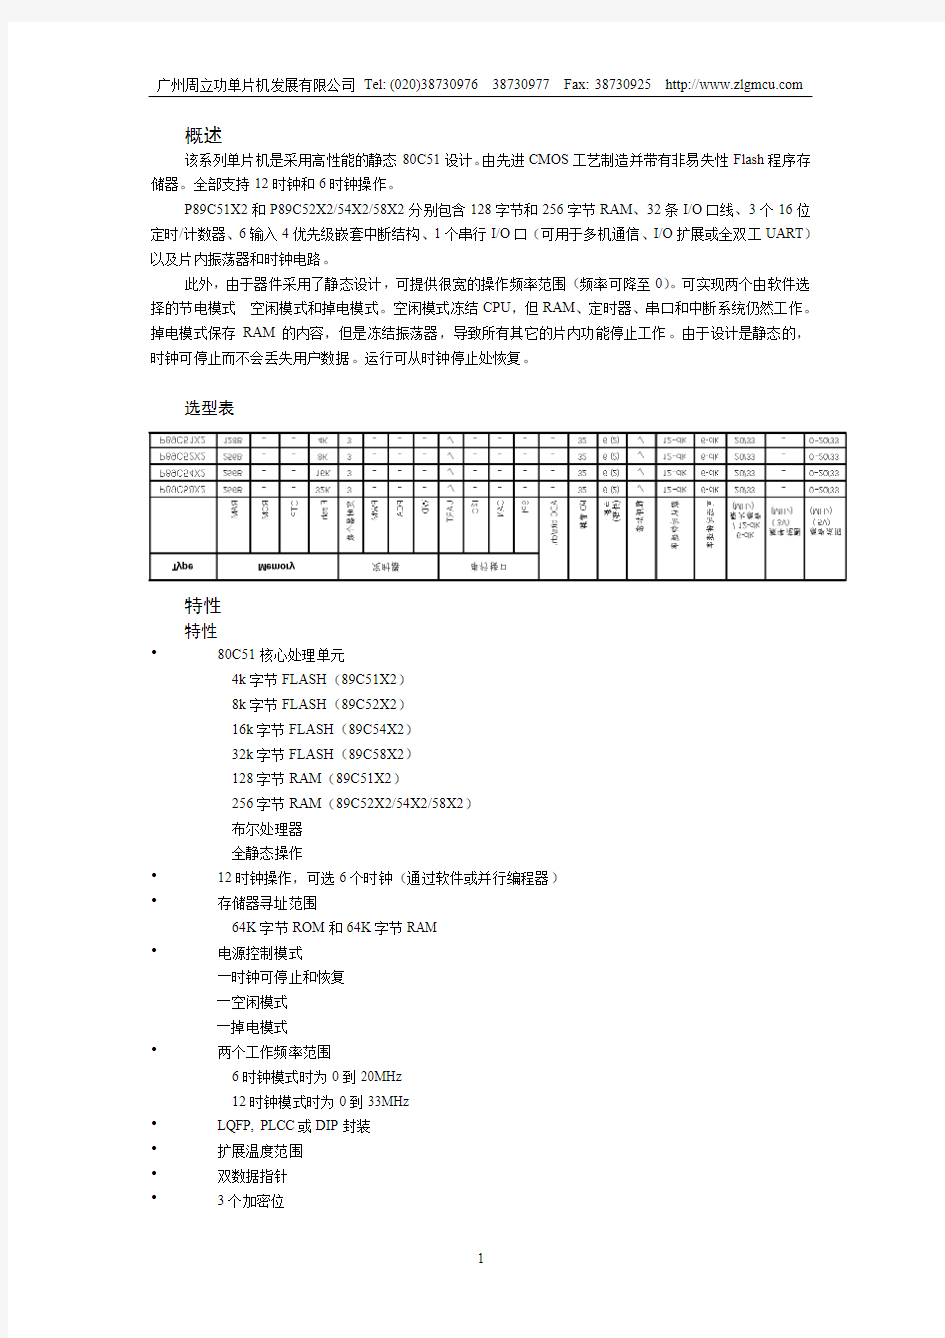 89c51中文使用手册